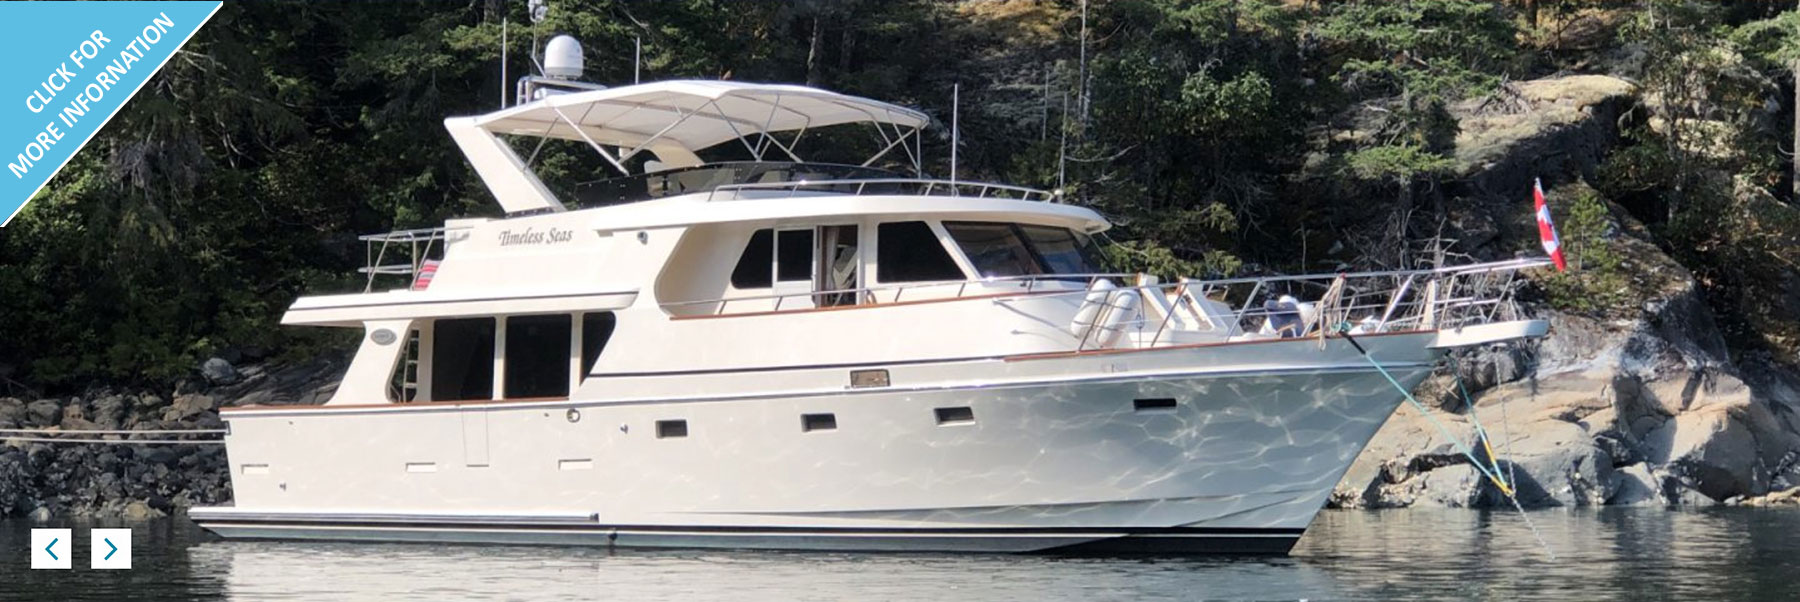 photo of 2010 Symbol Classic Pilothouse boat